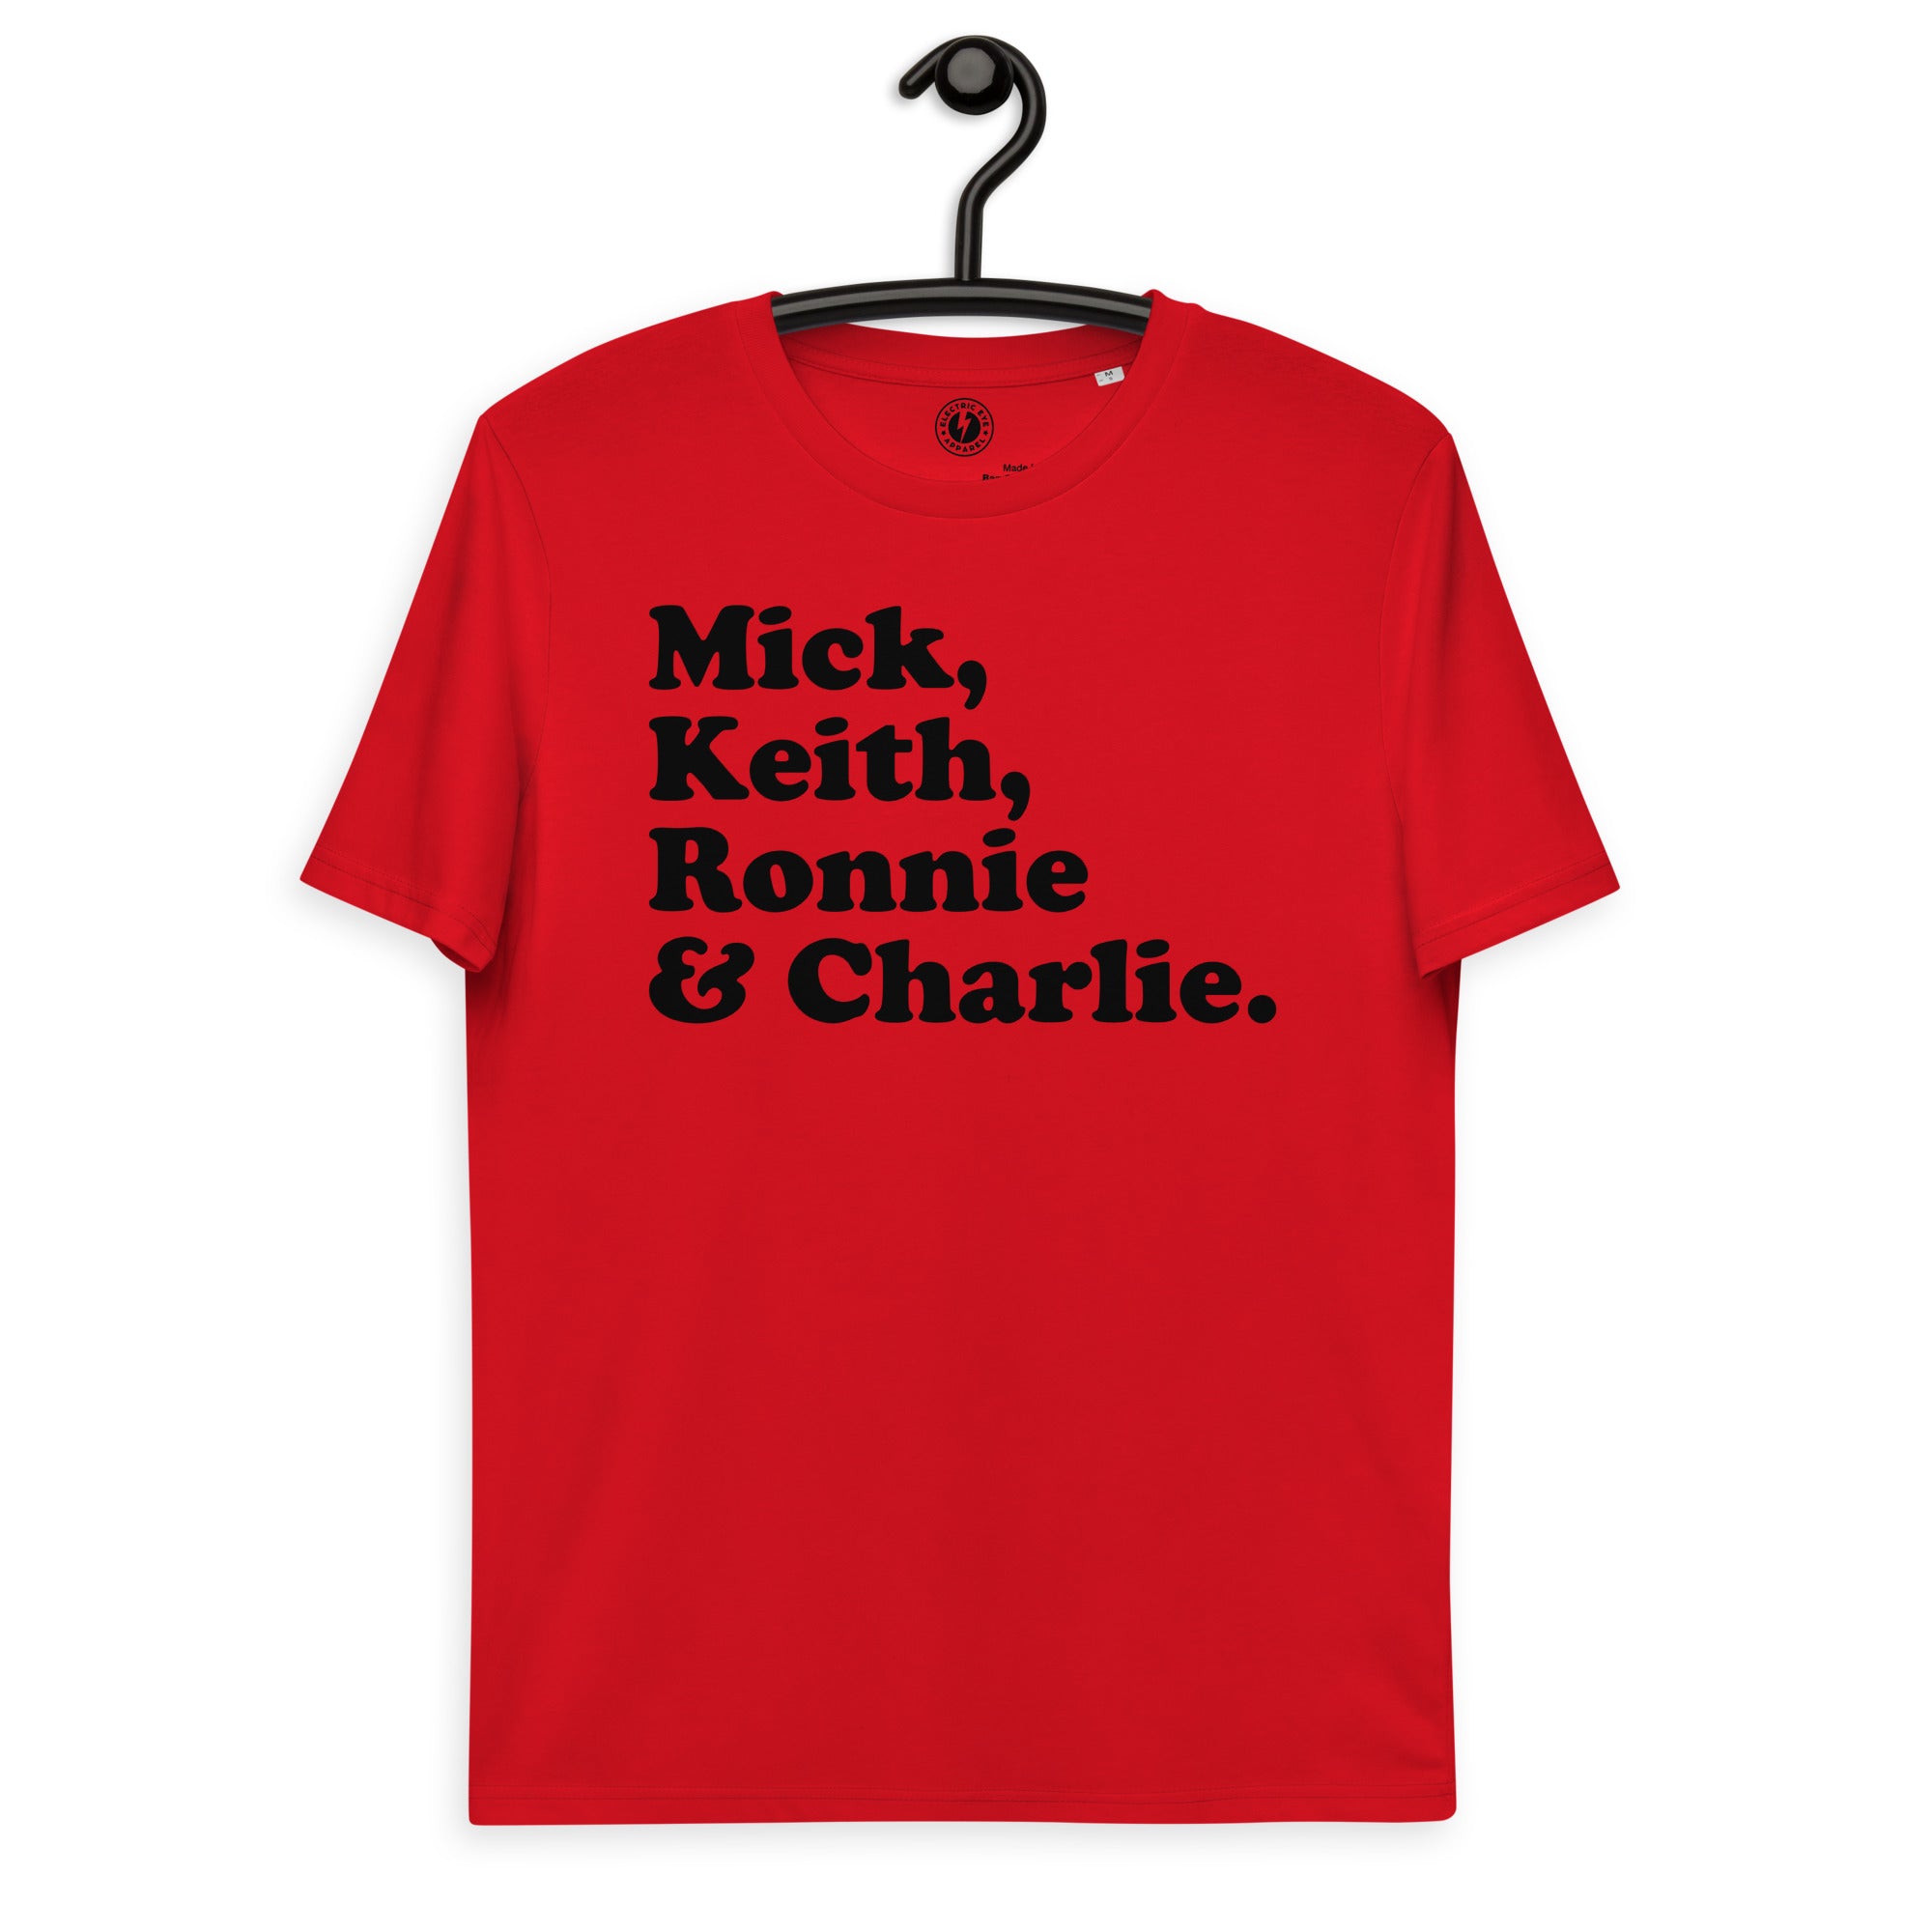 Mick, Keith, Ronnie & Charlie - Band Member Names - Premium Printed Unisex organic cotton t-shirt - black text